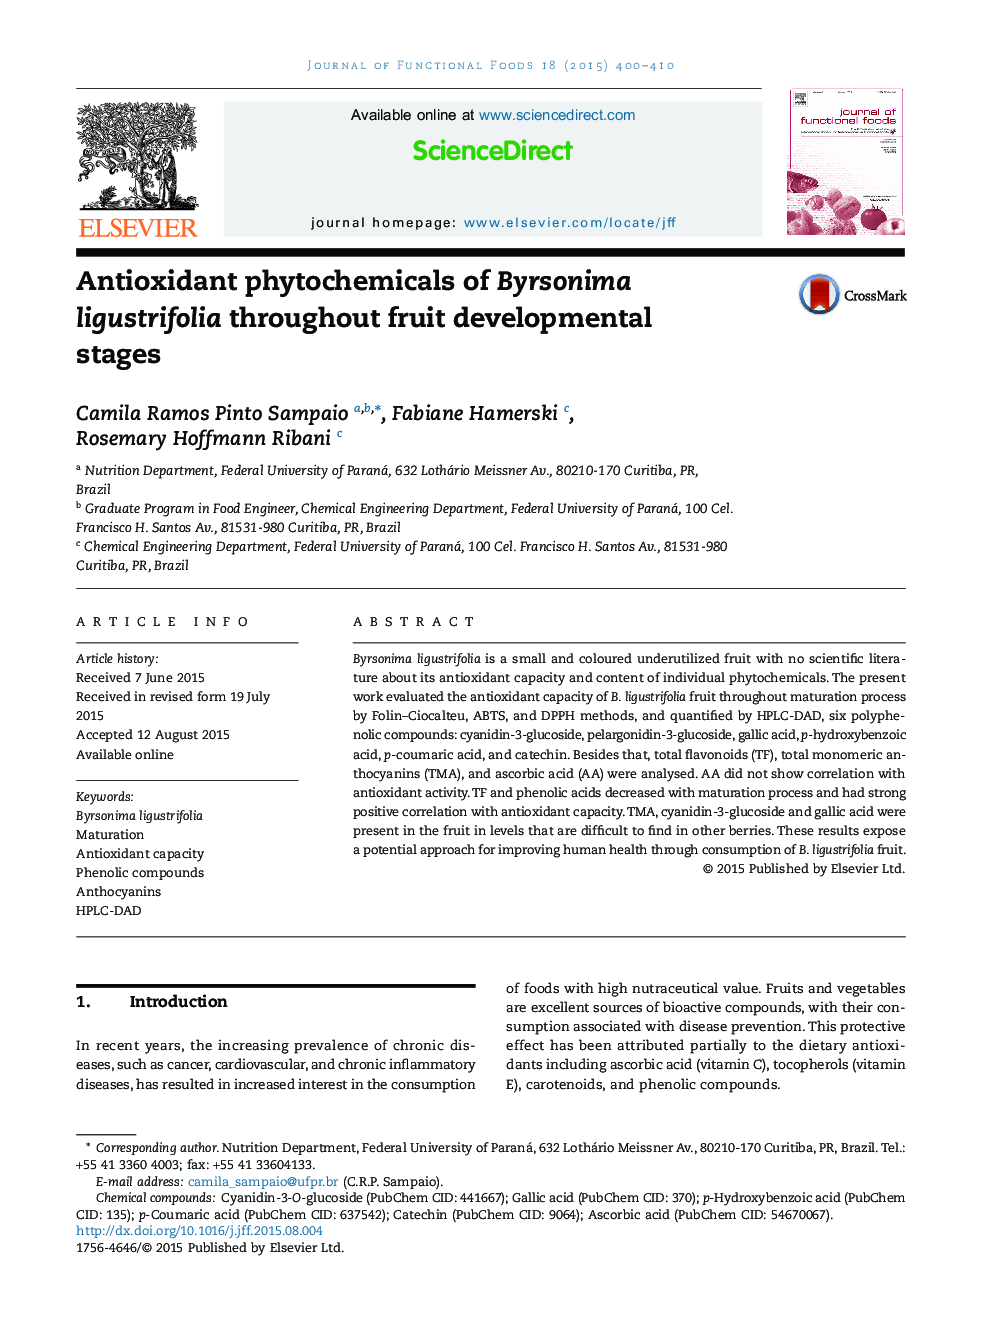 Antioxidant phytochemicals of Byrsonima ligustrifolia throughout fruit developmental stages